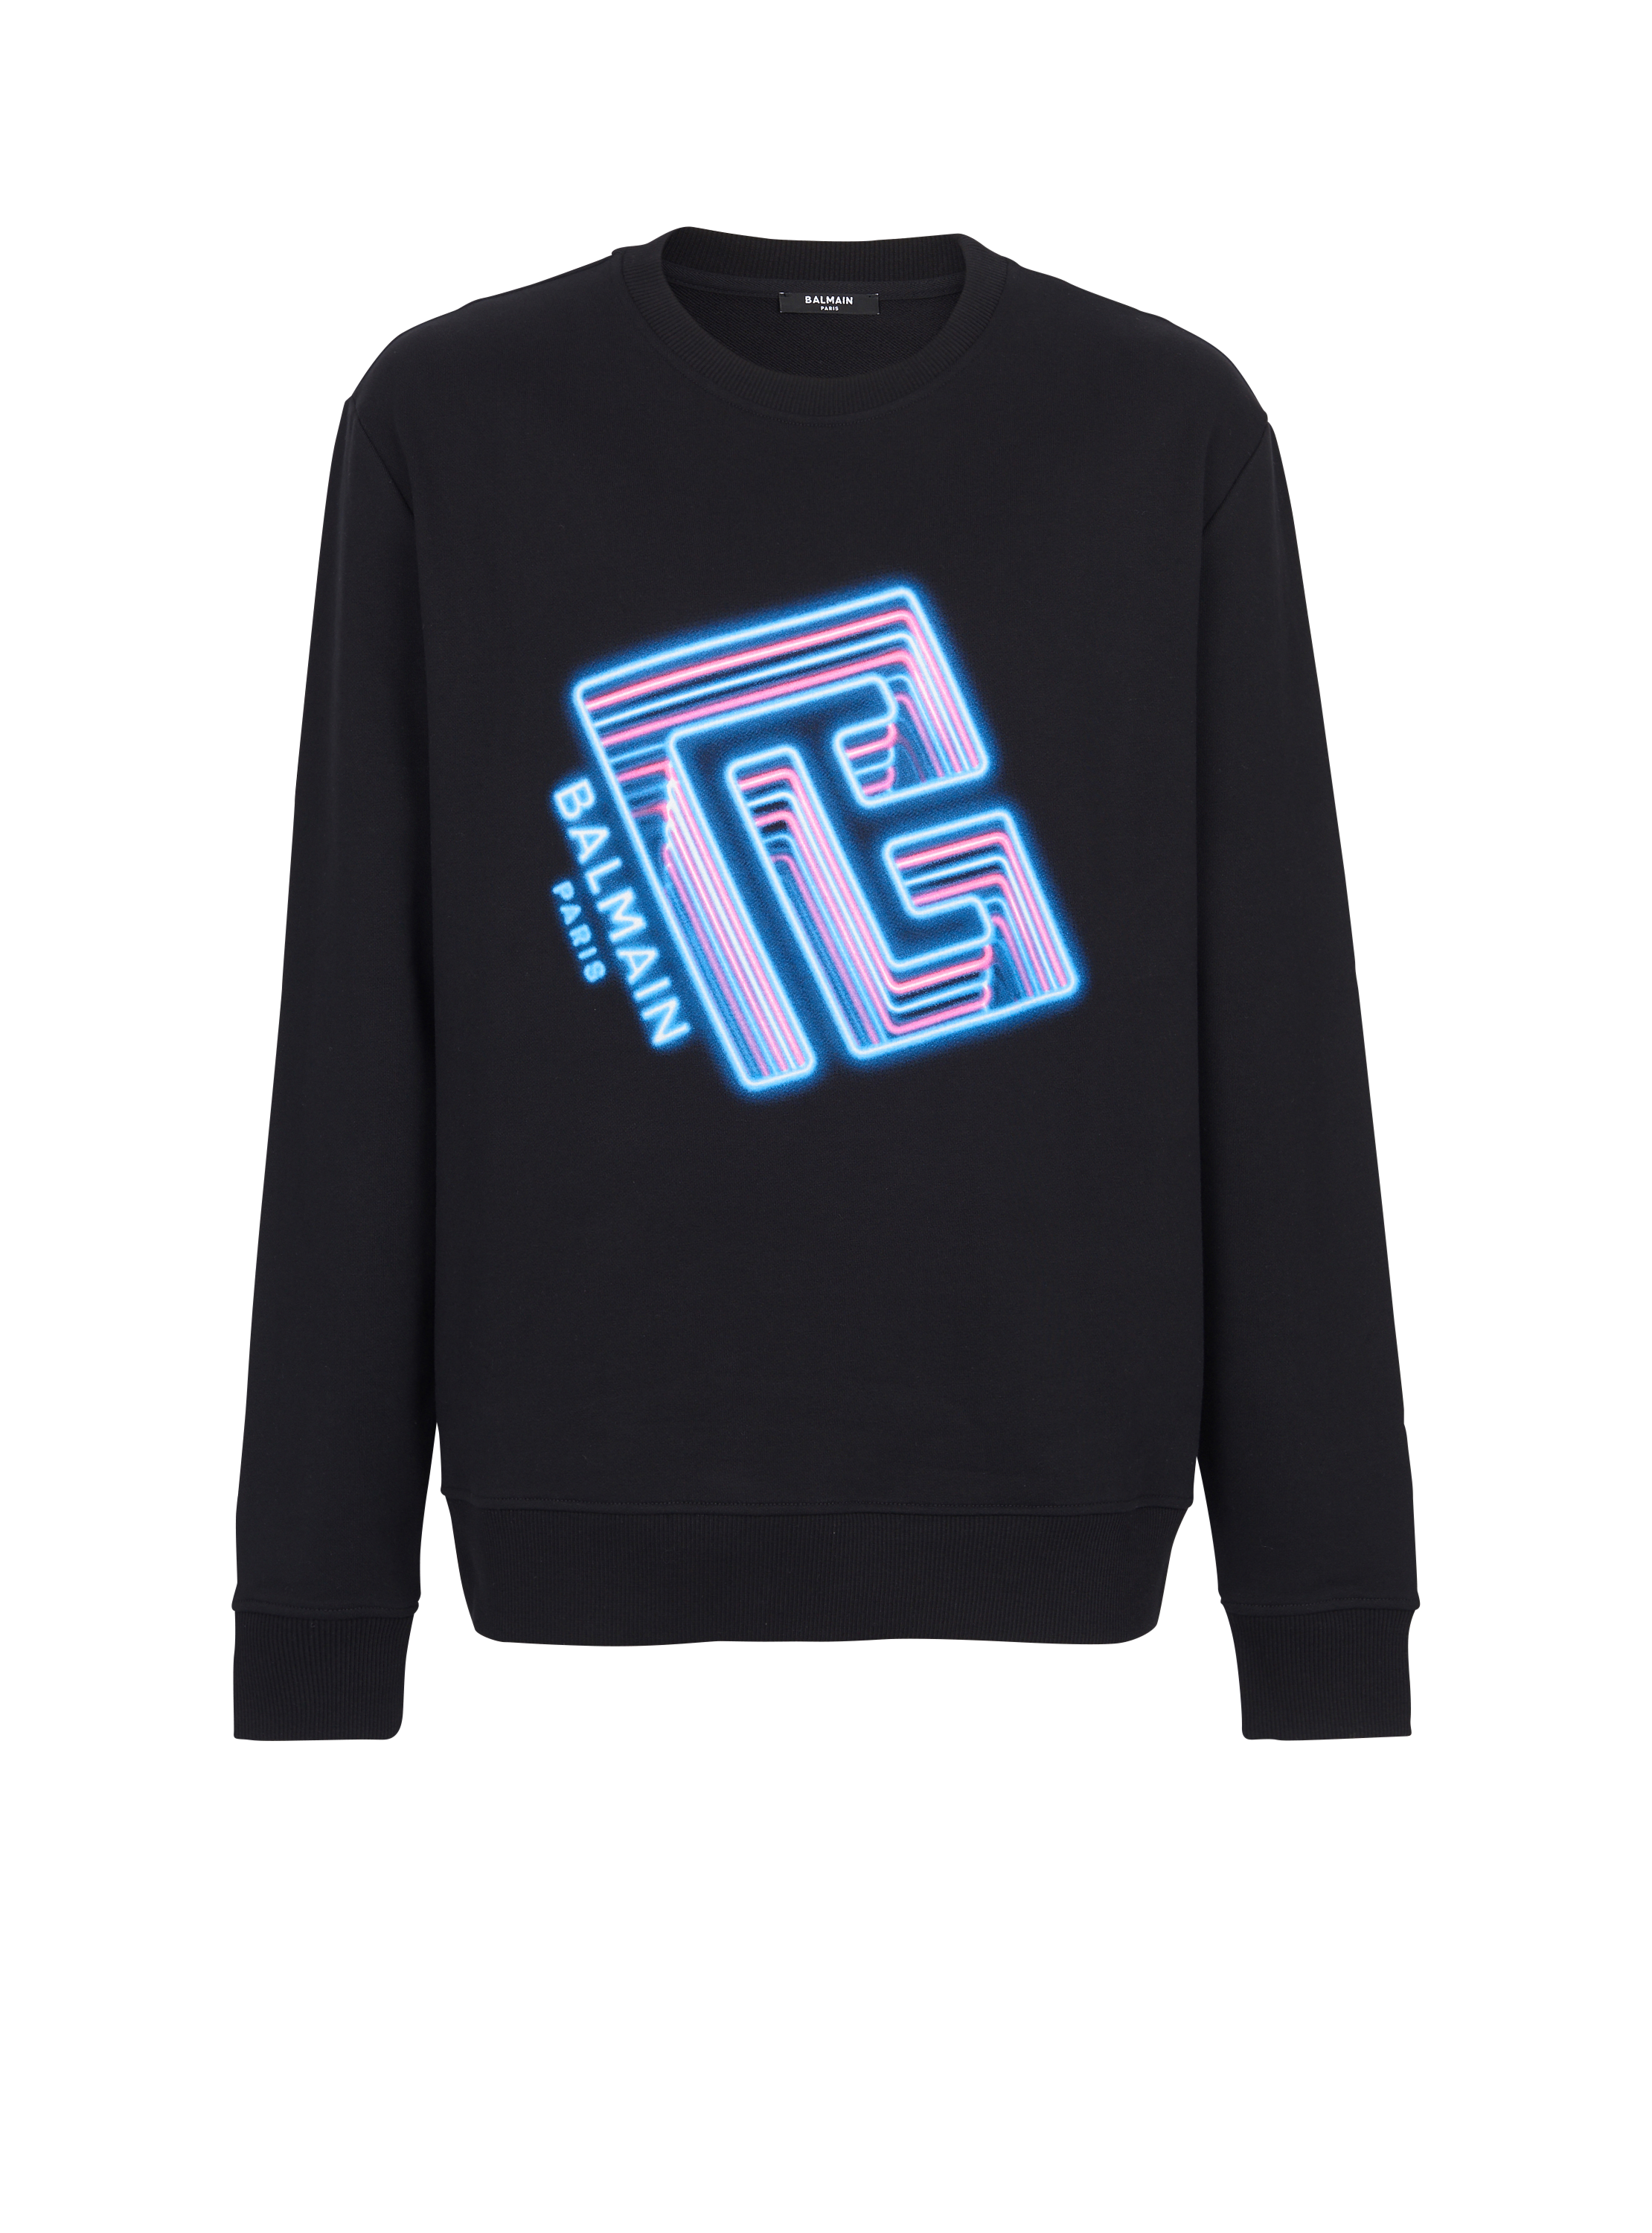 Sweatshirt mit Neon Logo-Print, schwarz, hi-res